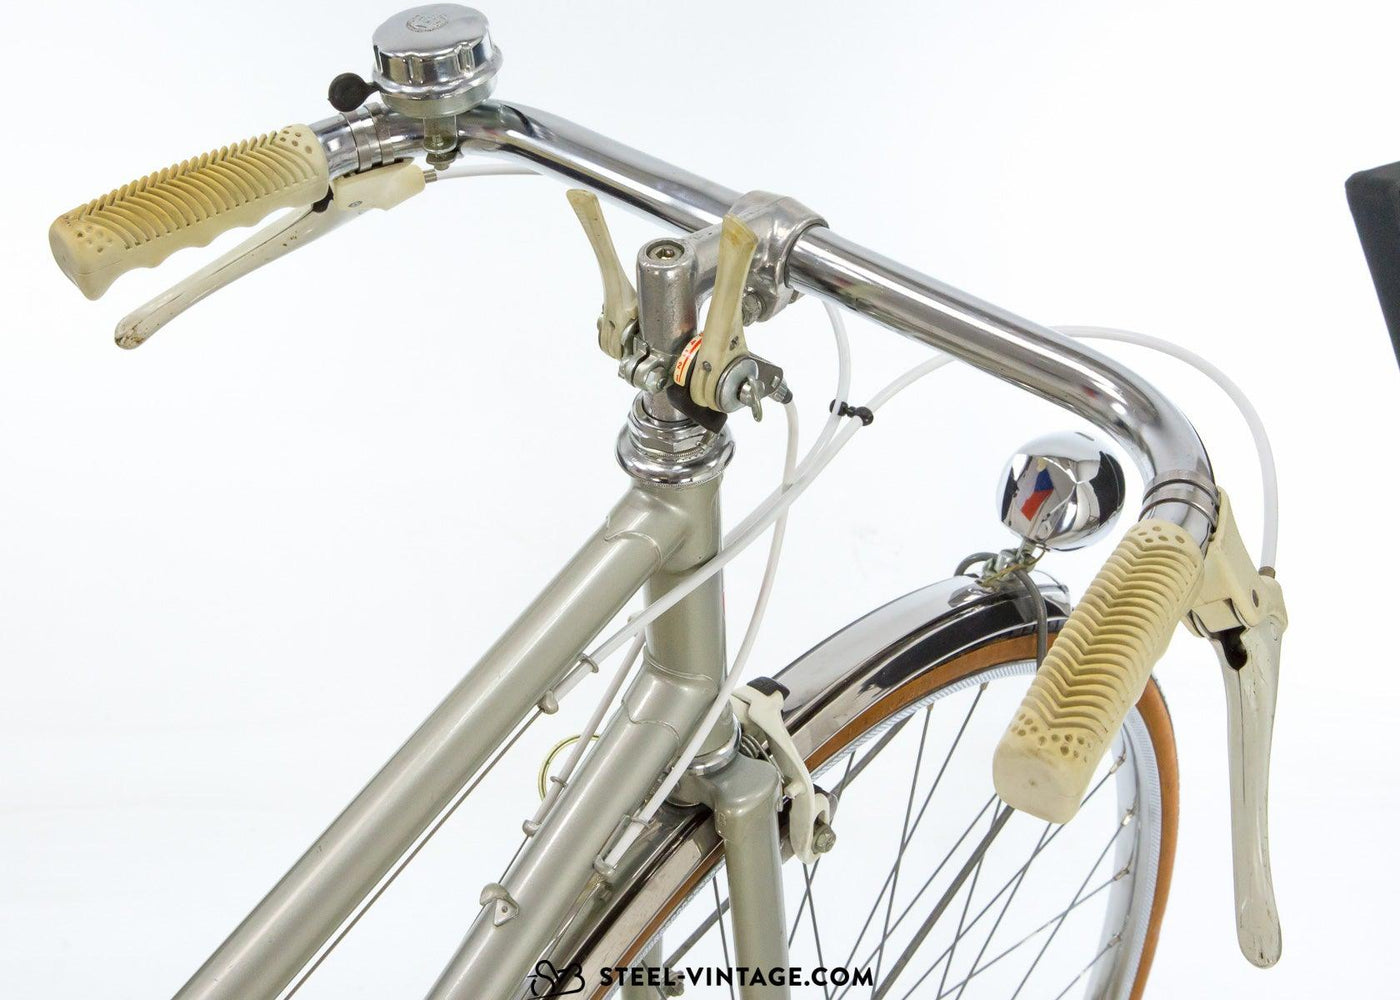 Charlier Classic Ladies Anglais Bike 1970s - Steel Vintage Bikes